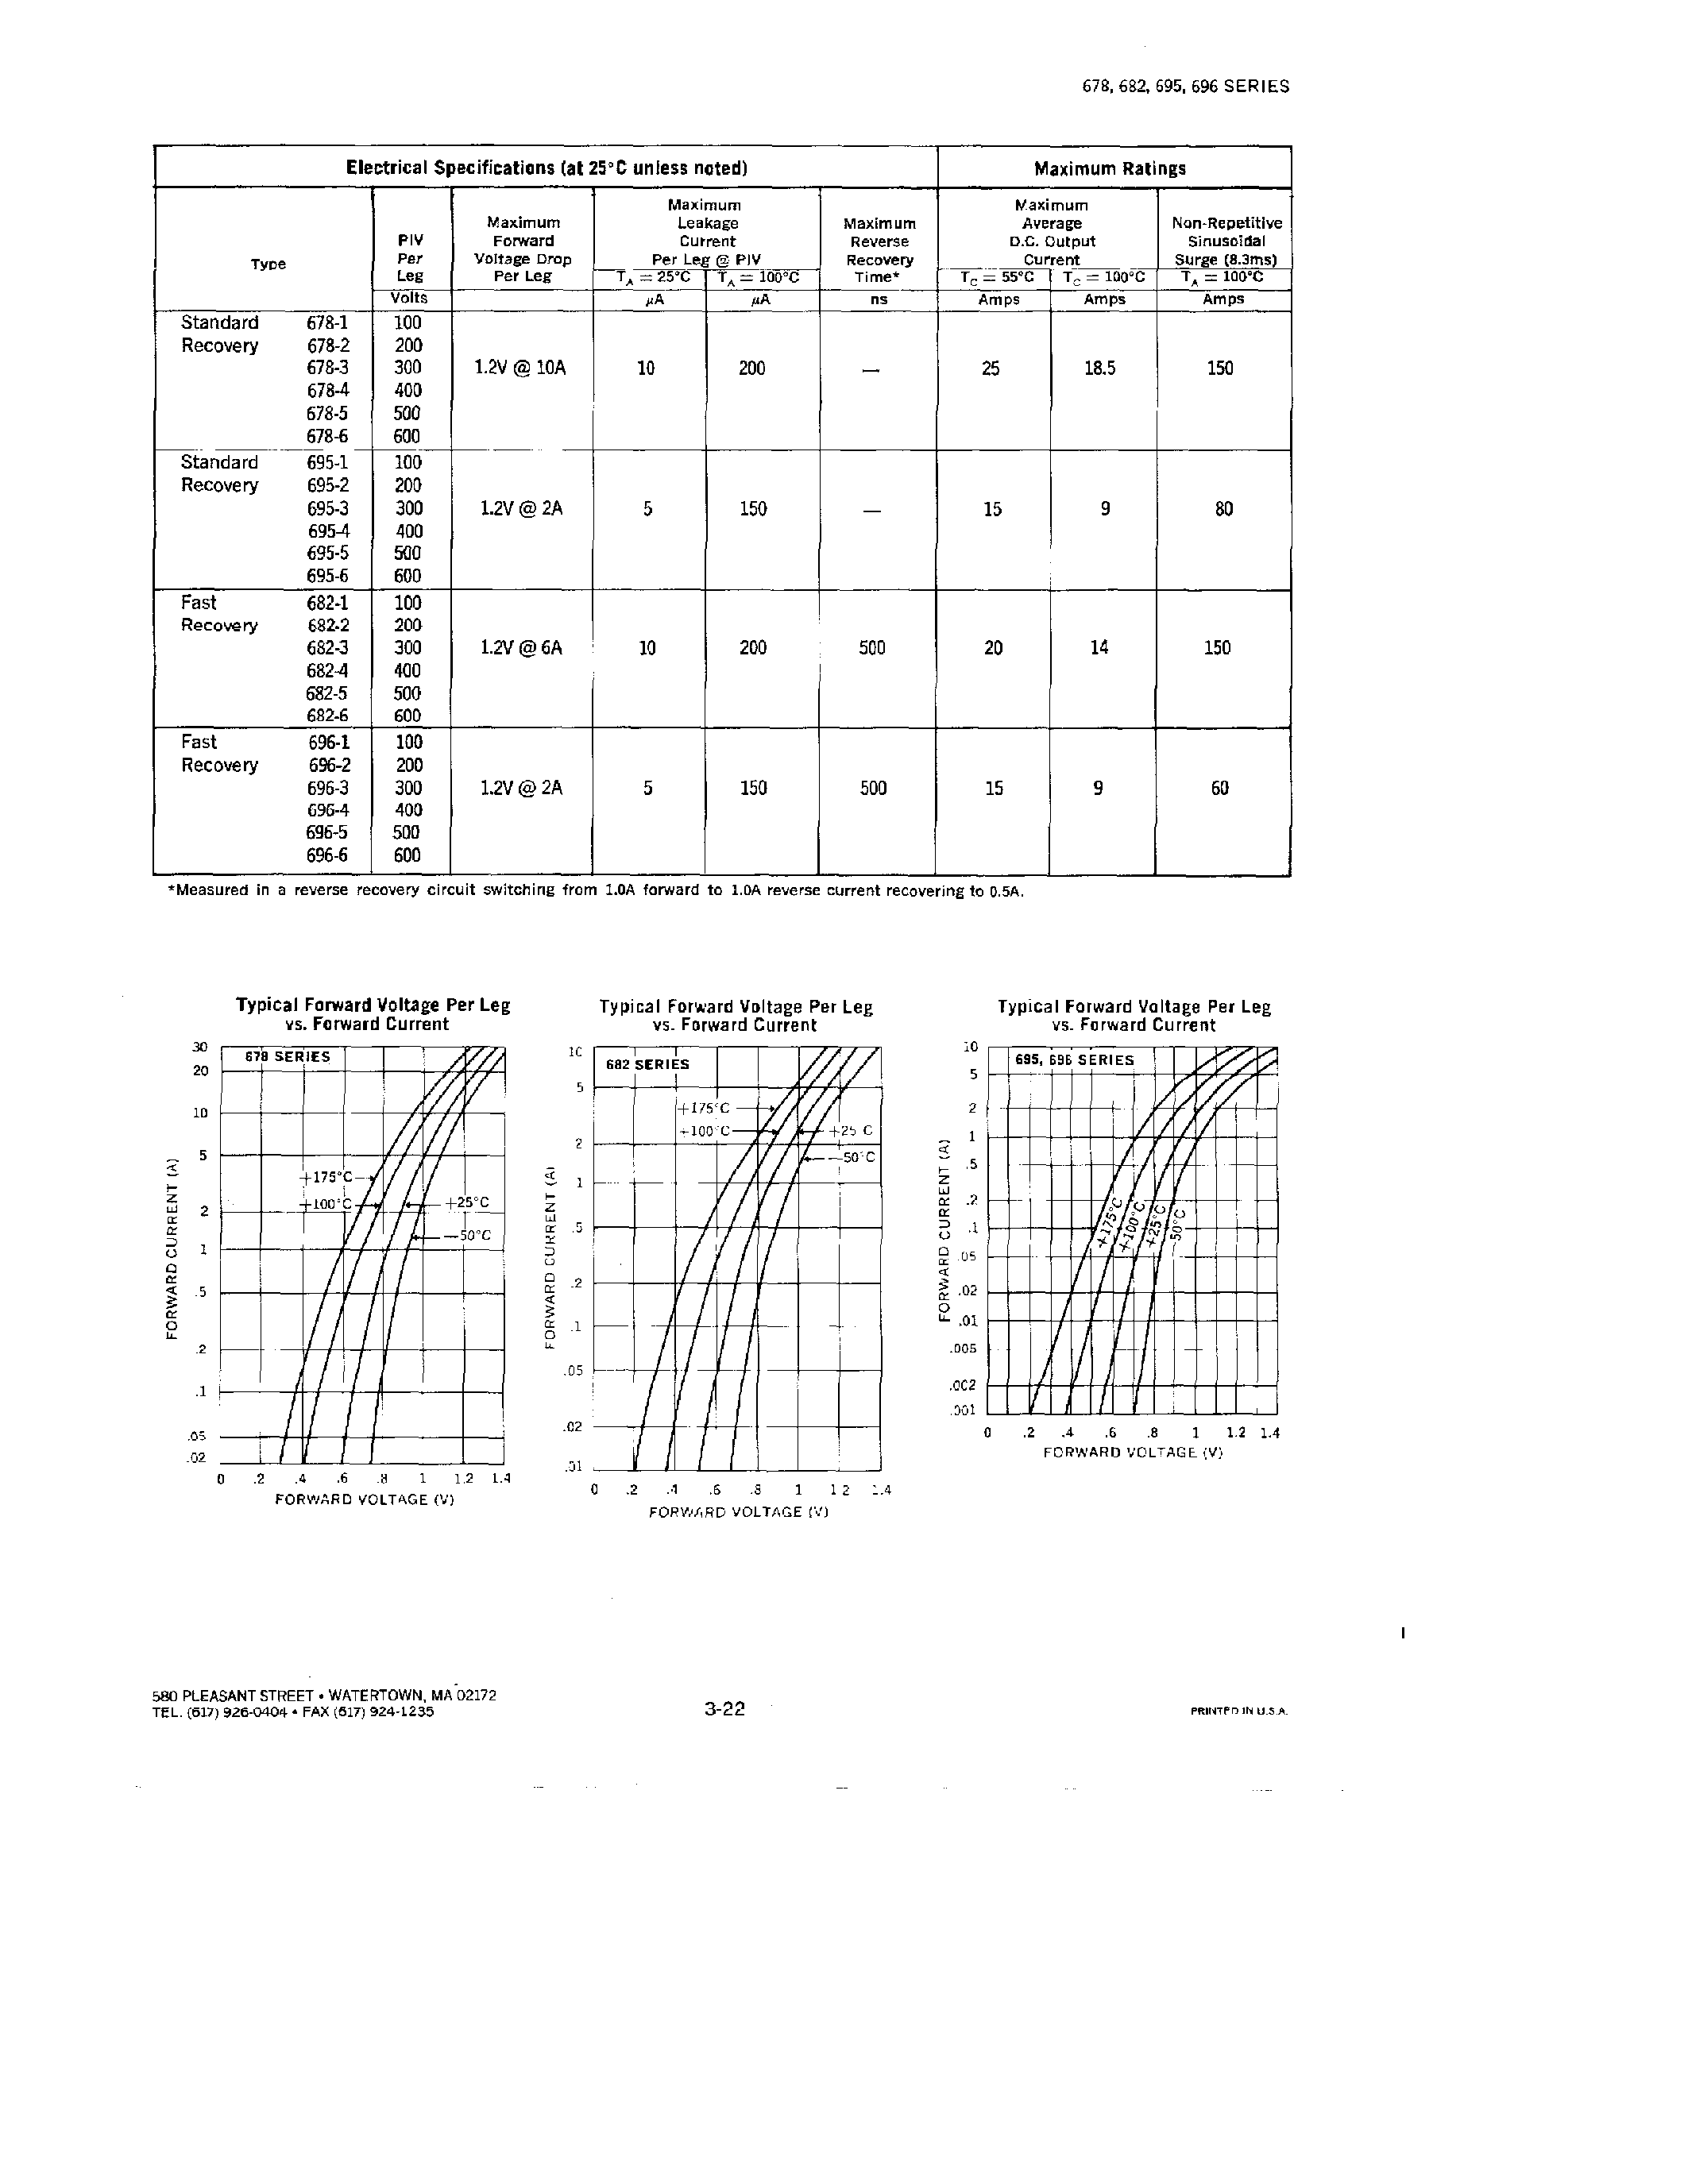 Datasheet 682-6 - RECTIFIERS ASSEMBLIES page 2